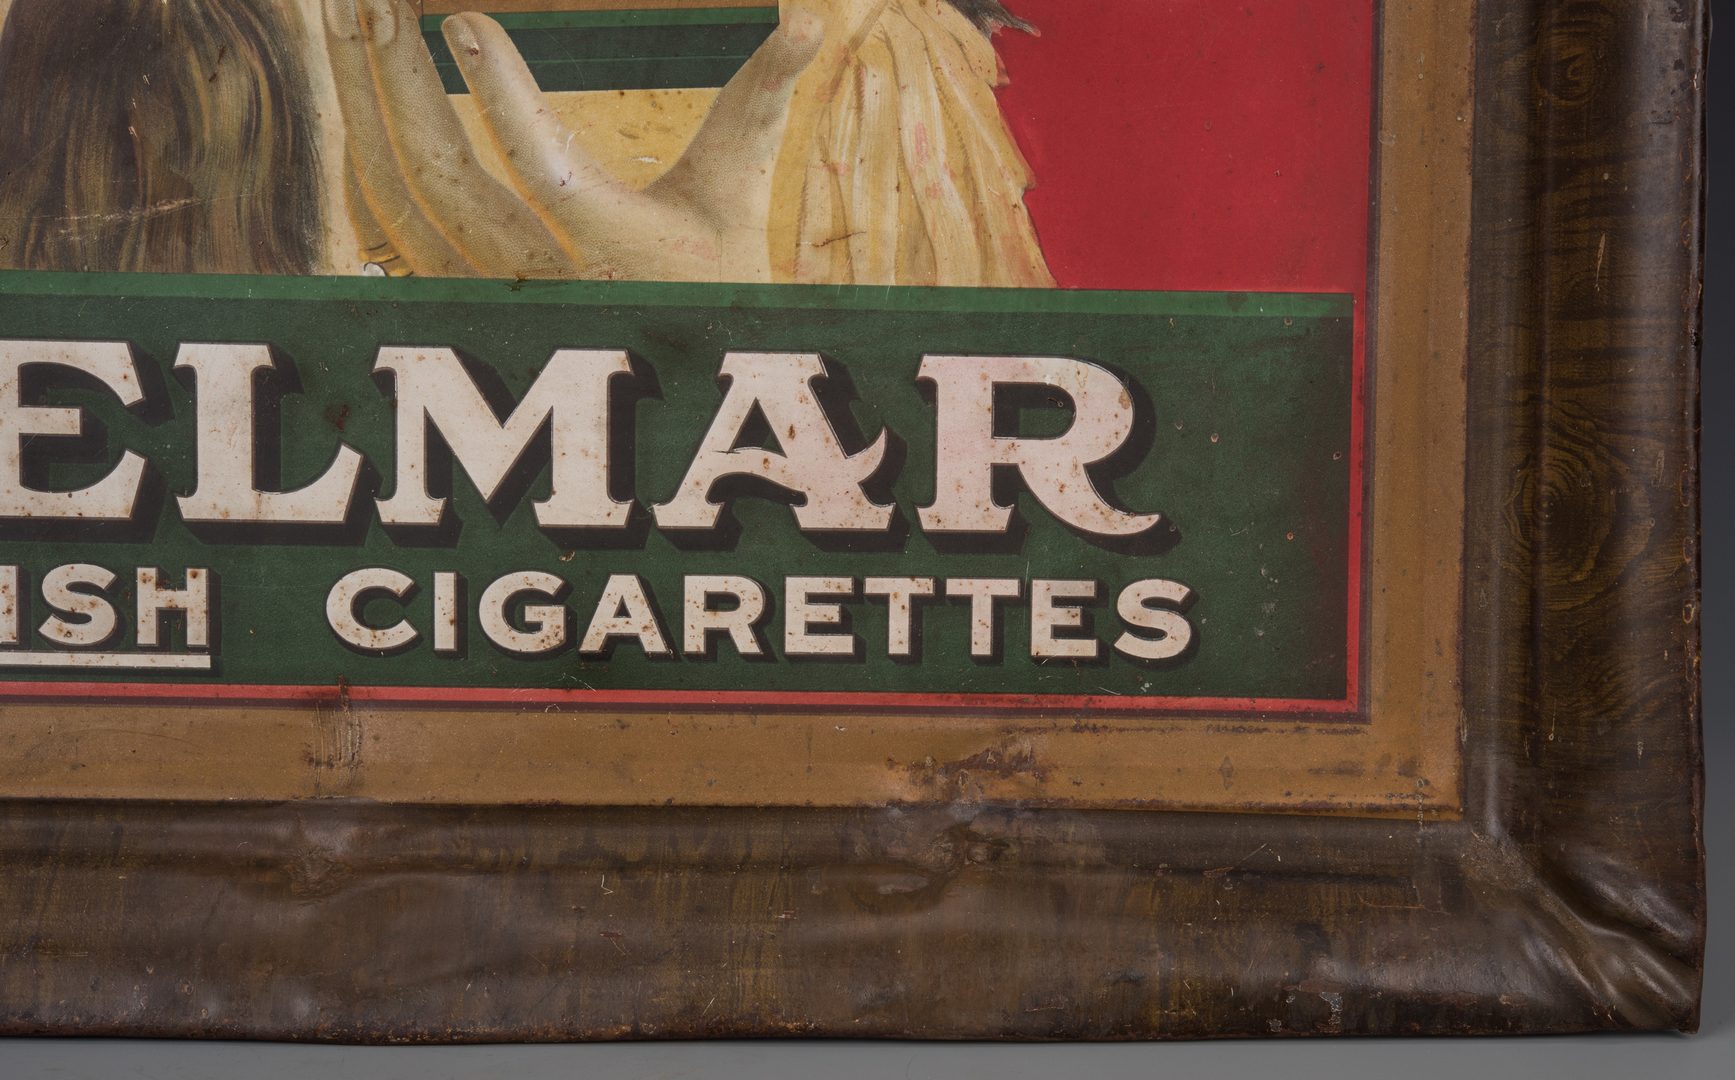 Lot 836: Helmar Turkish Cigarettes Advertising Sign